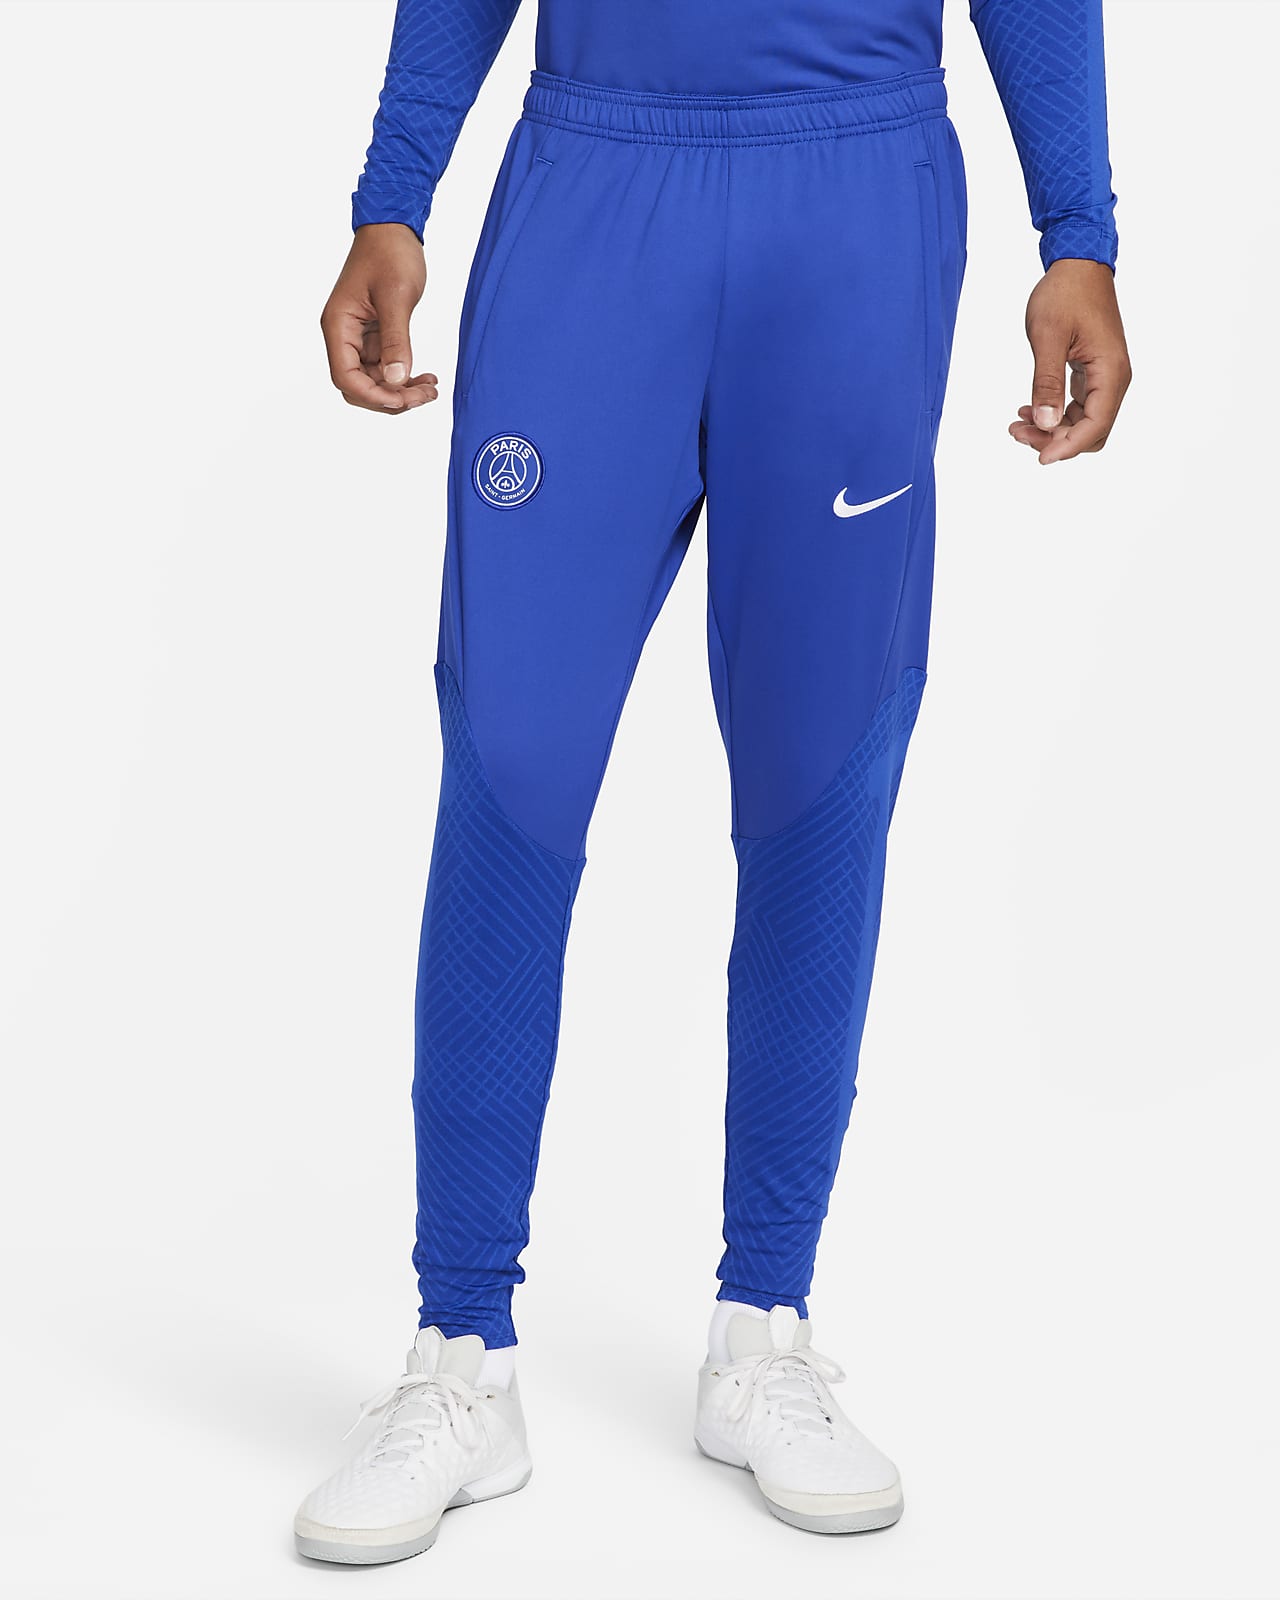 Paris Saint-Germain Nike Dri-FIT Knit Soccer Pants.